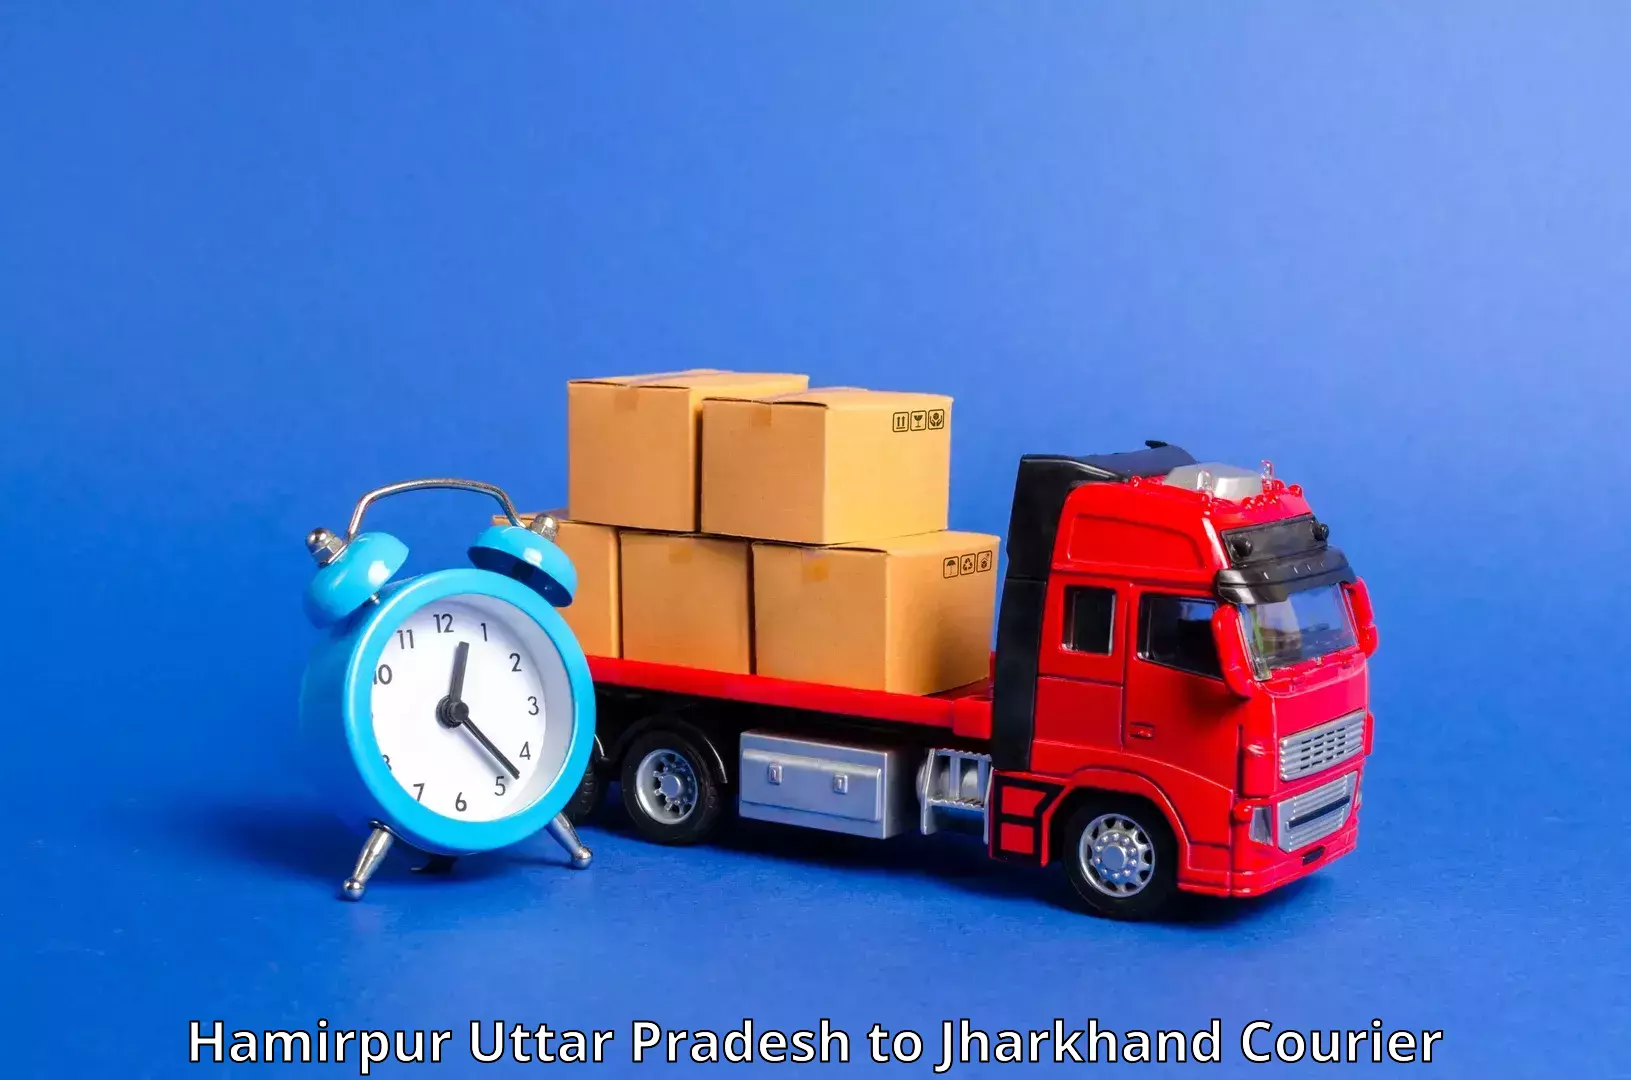 Smart shipping technology Hamirpur Uttar Pradesh to Jharkhand